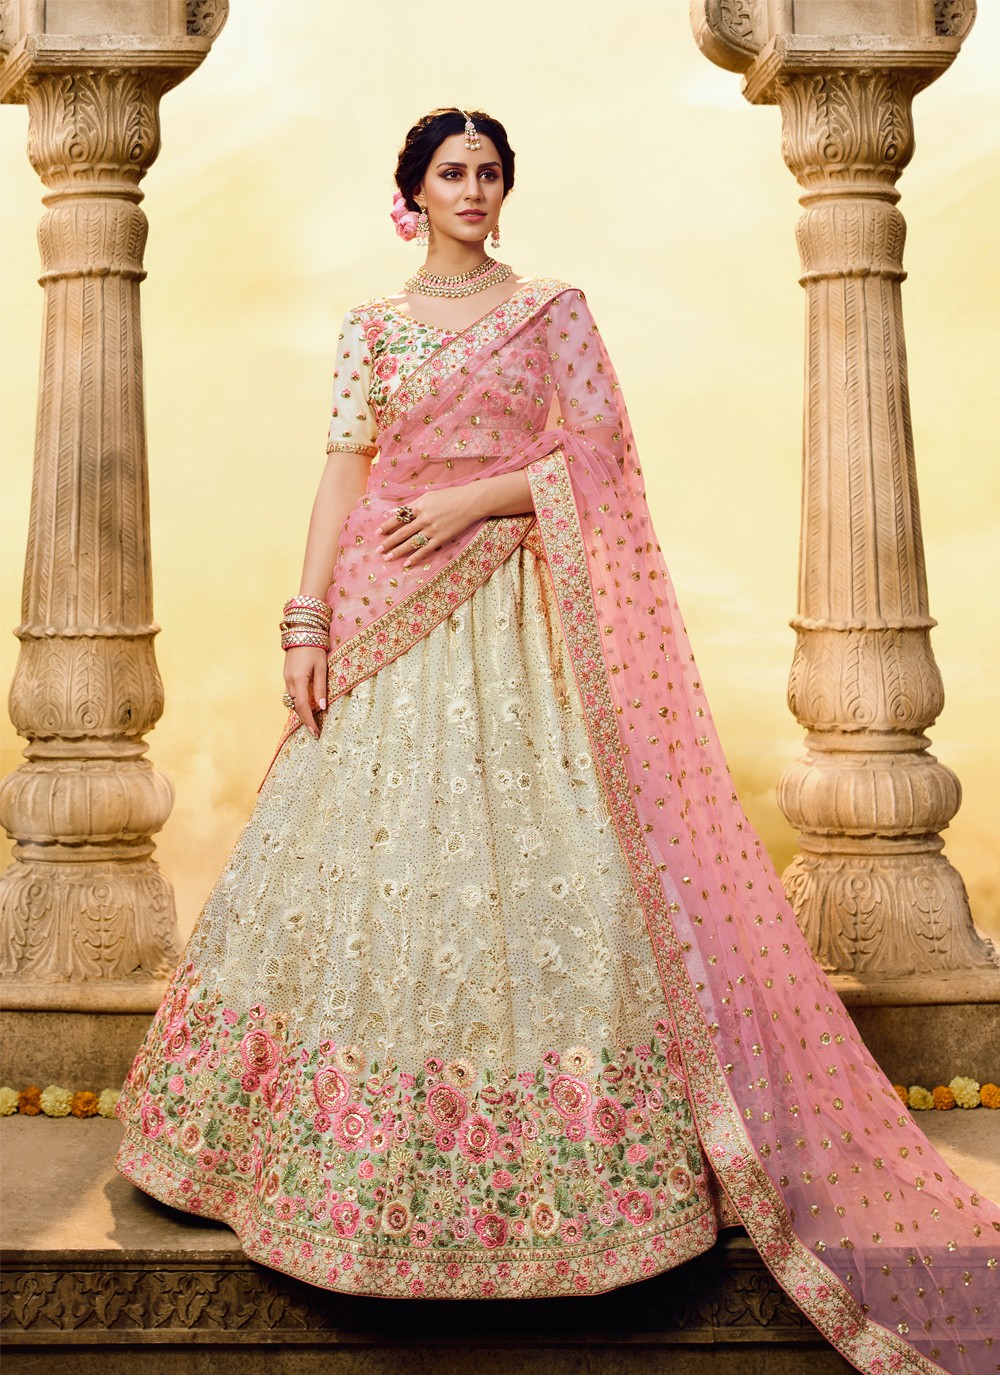 Bride in a Subtle Pink Lehenga for Engagement Ceremony | Mehendi ceremony  outfits, Simple mehndi dresses, Bridal lehenga designs